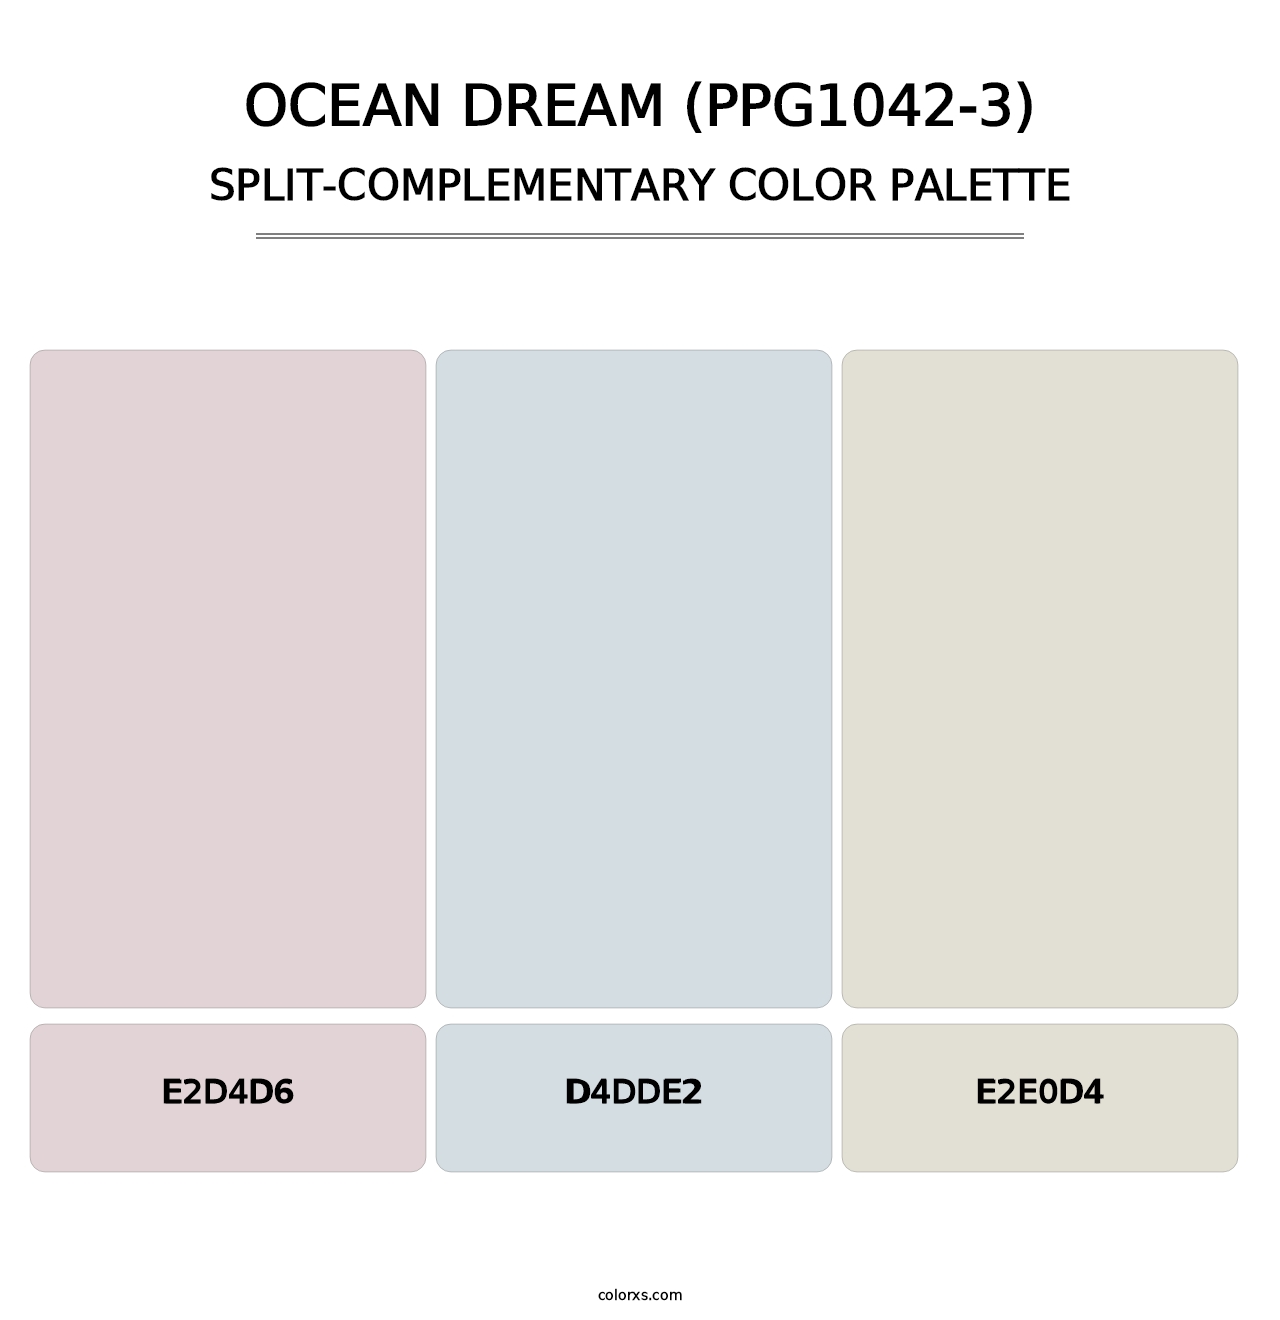 Ocean Dream (PPG1042-3) - Split-Complementary Color Palette